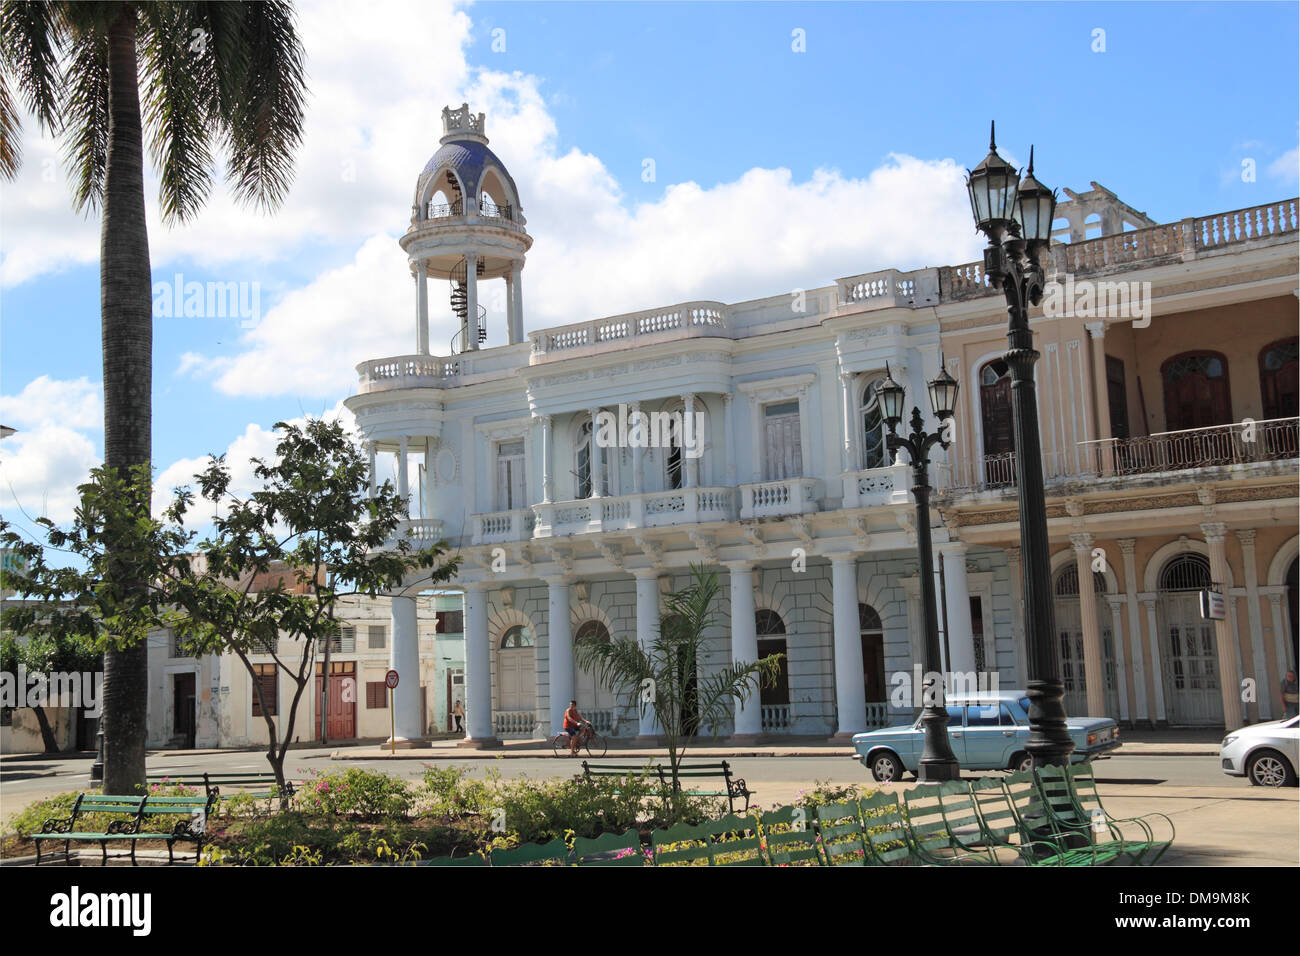 Casa Provincial de la Cultura, le Palacio Ferrer, Parque José Martí, province de Cienfuegos, Cuba, mer des Caraïbes, l'Amérique centrale Banque D'Images